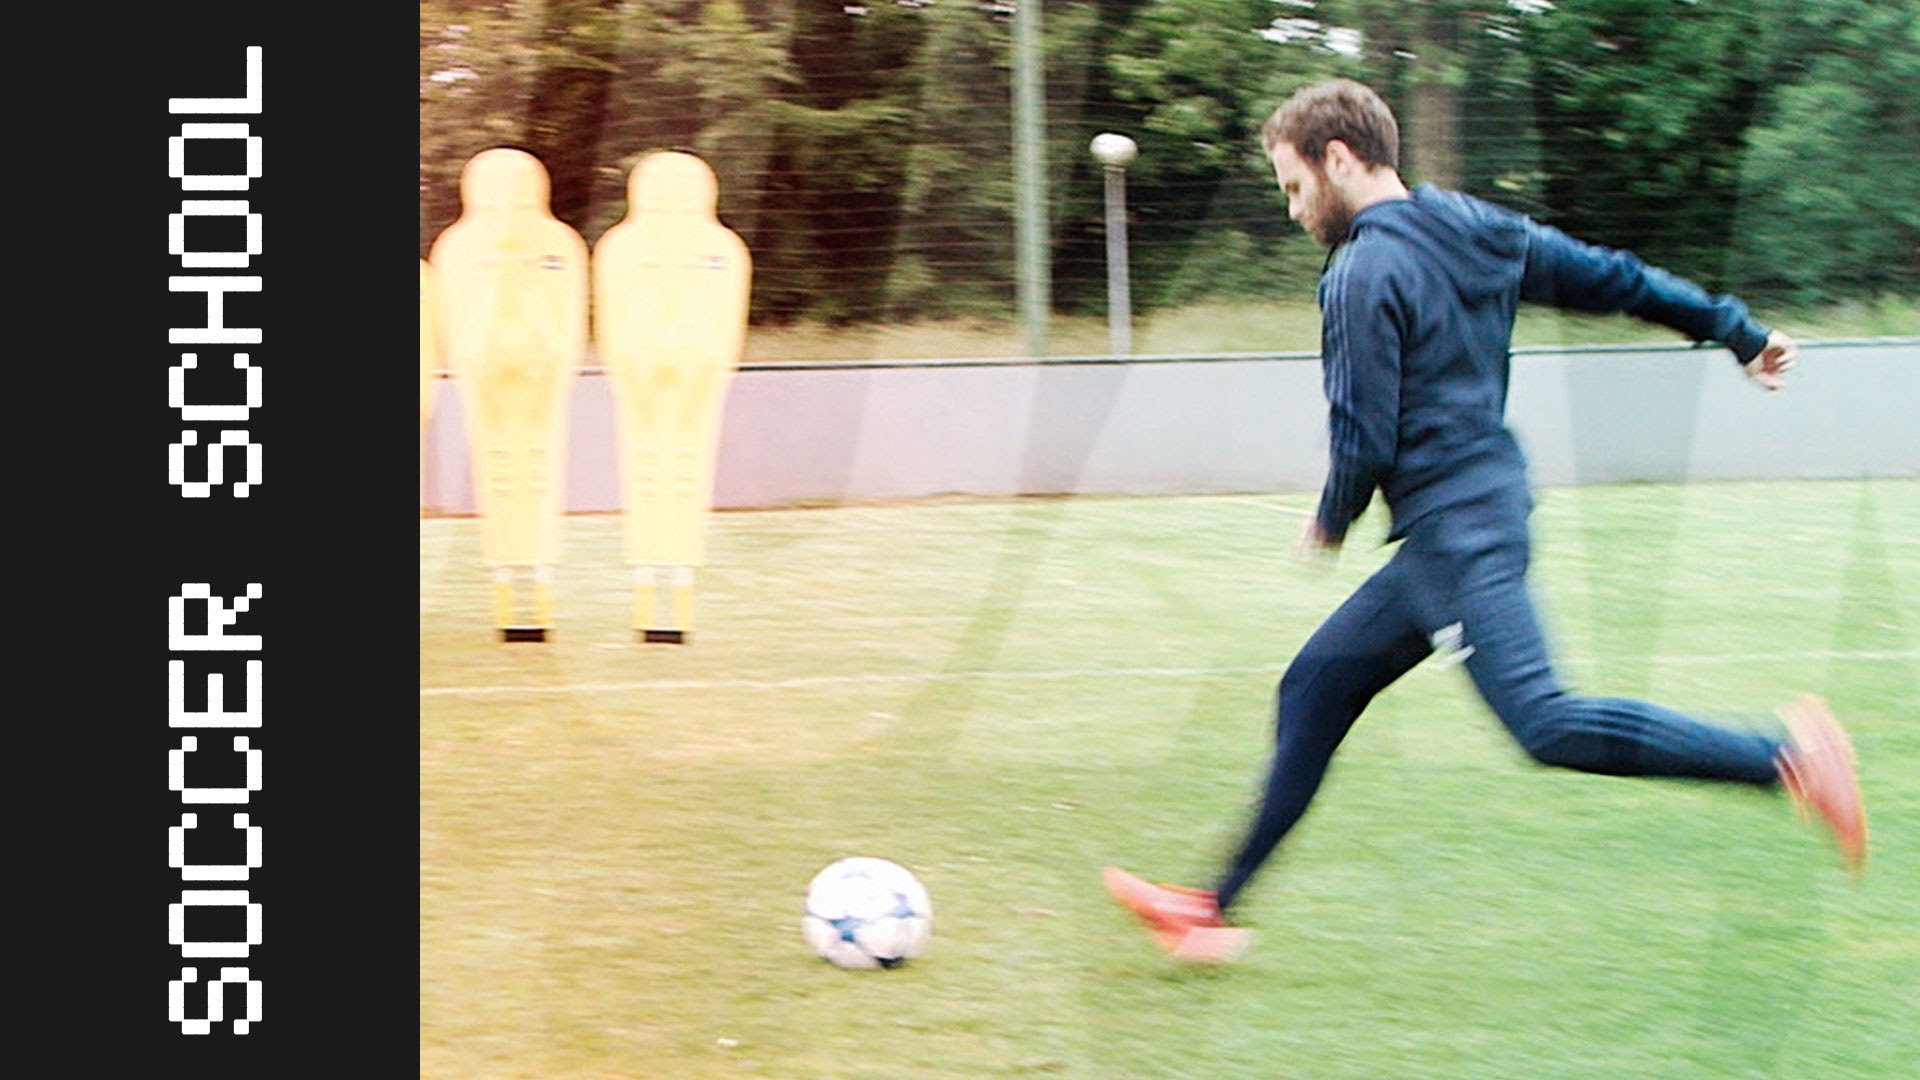 Manchester Untied's Juan Mata gives an amazing free-kick tutorial